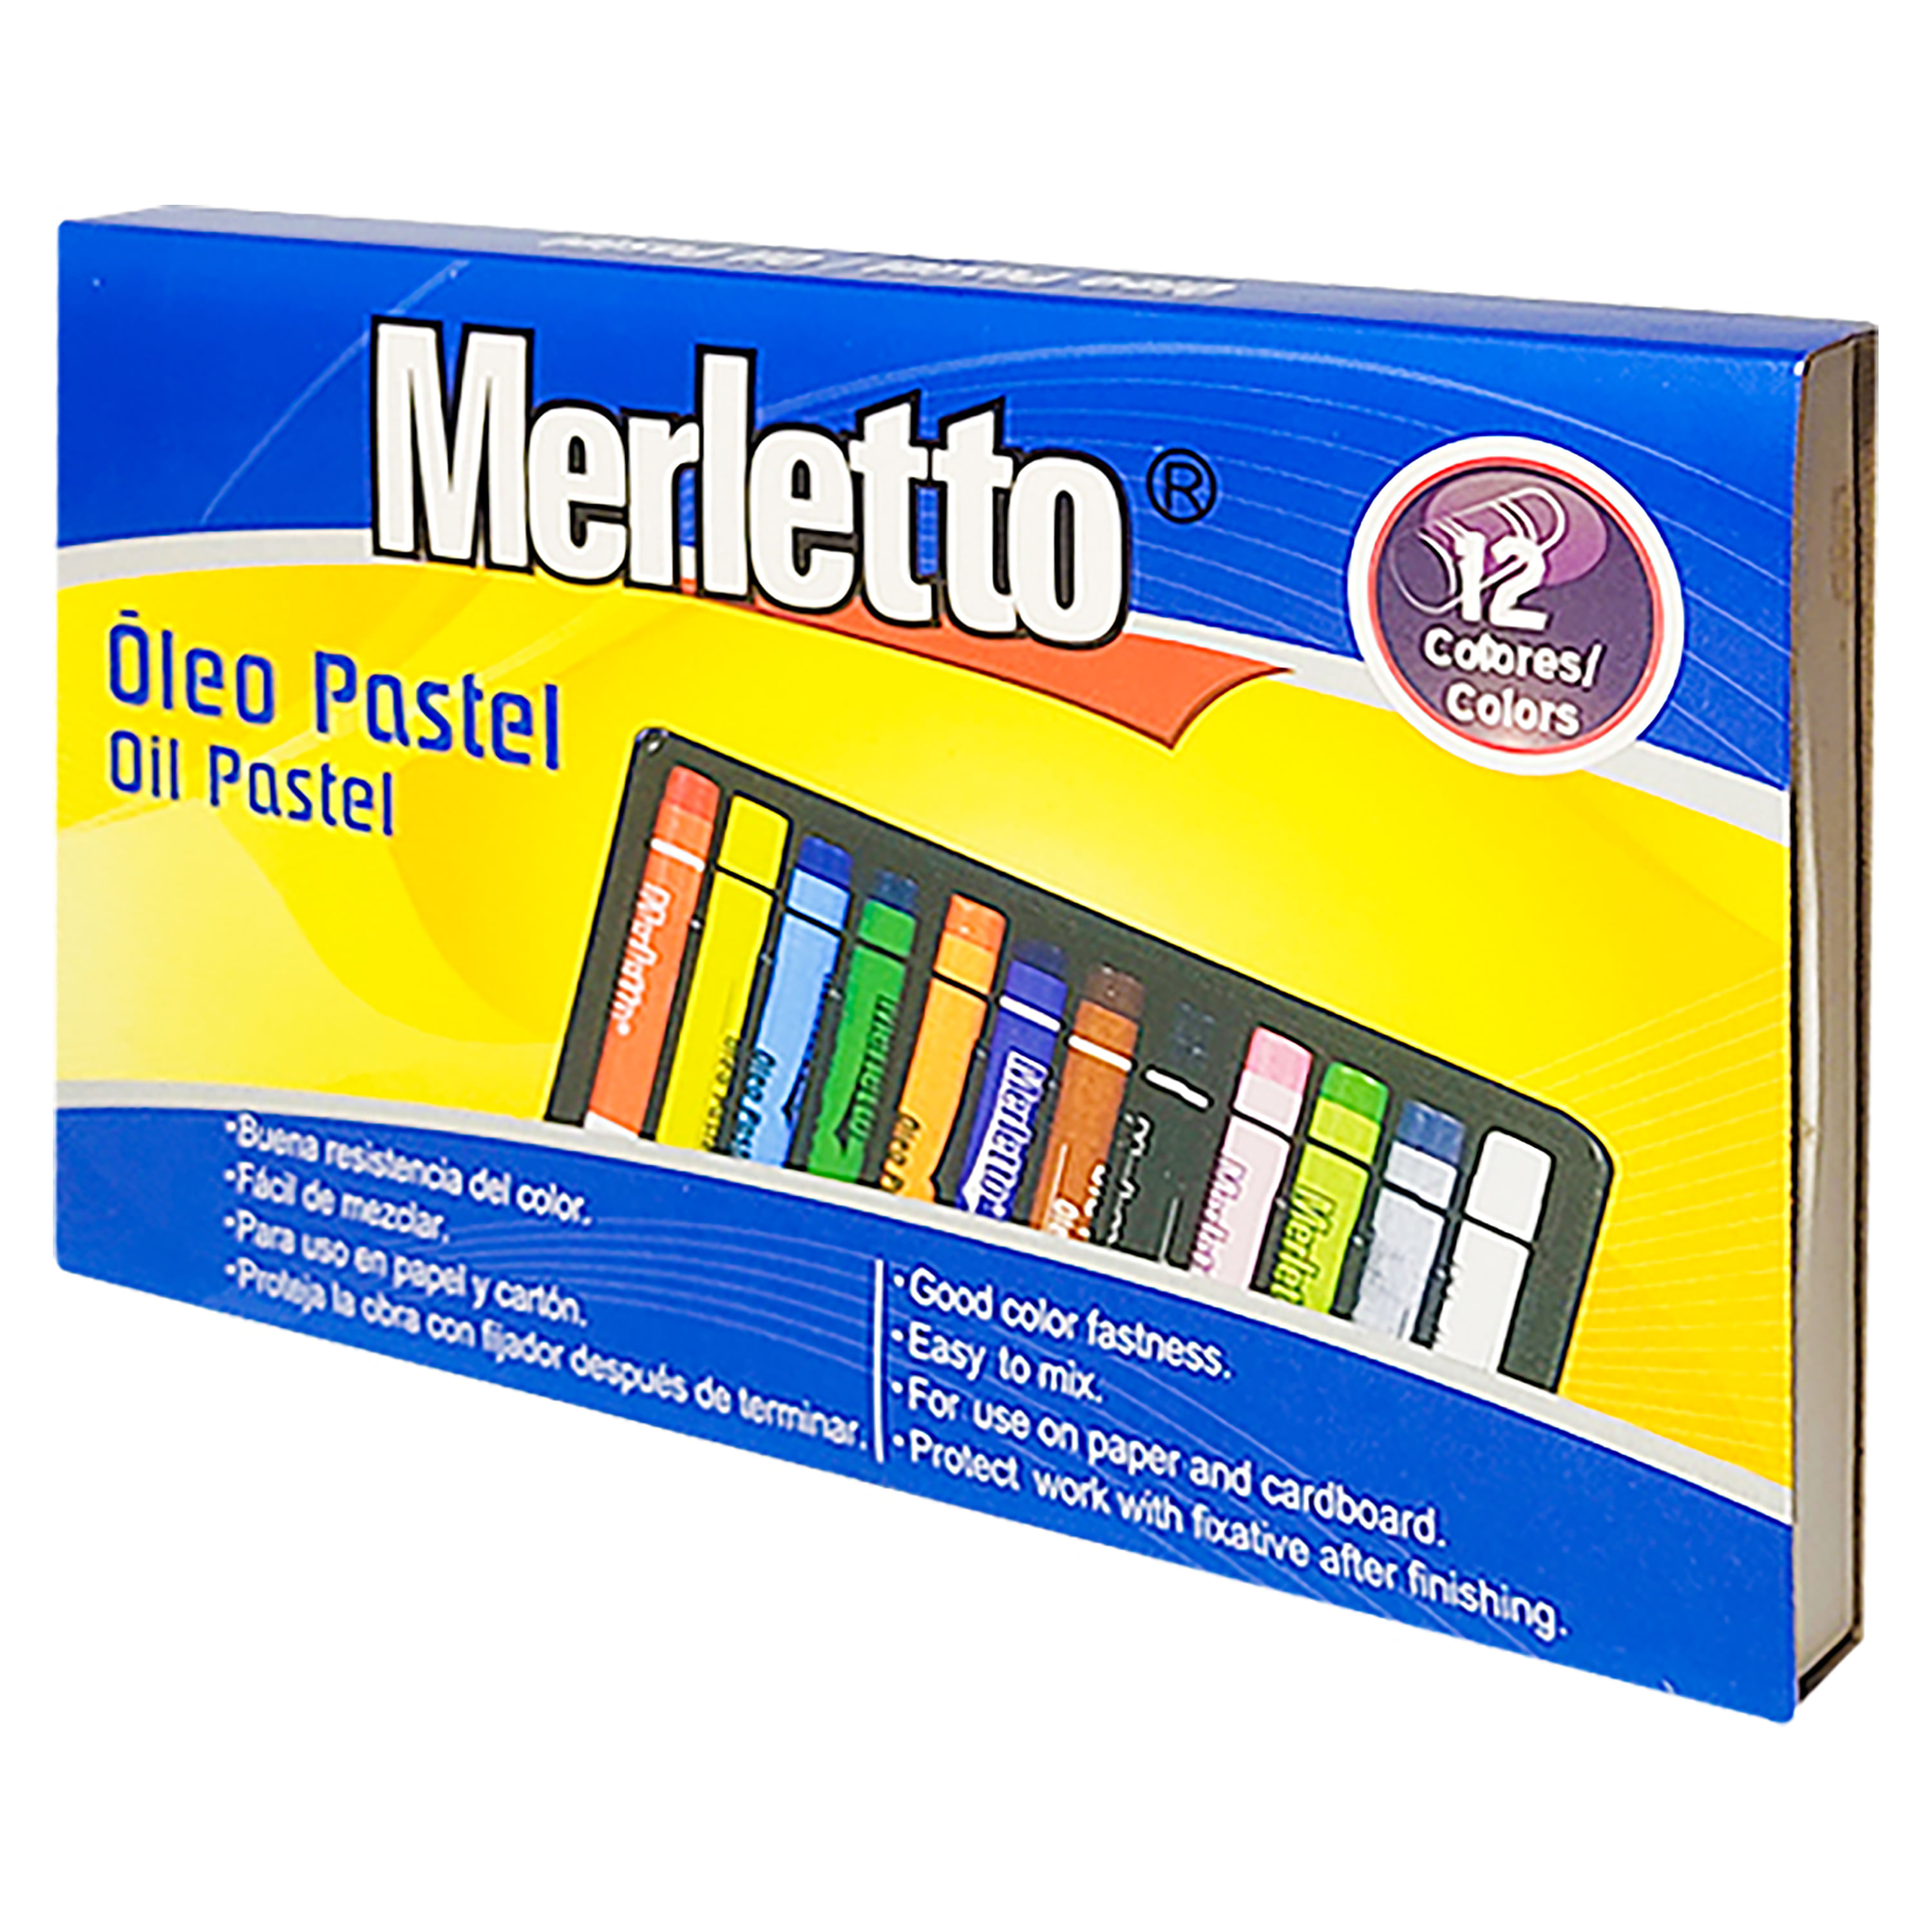 Óleo Pastel Merletto - 12 Unidades